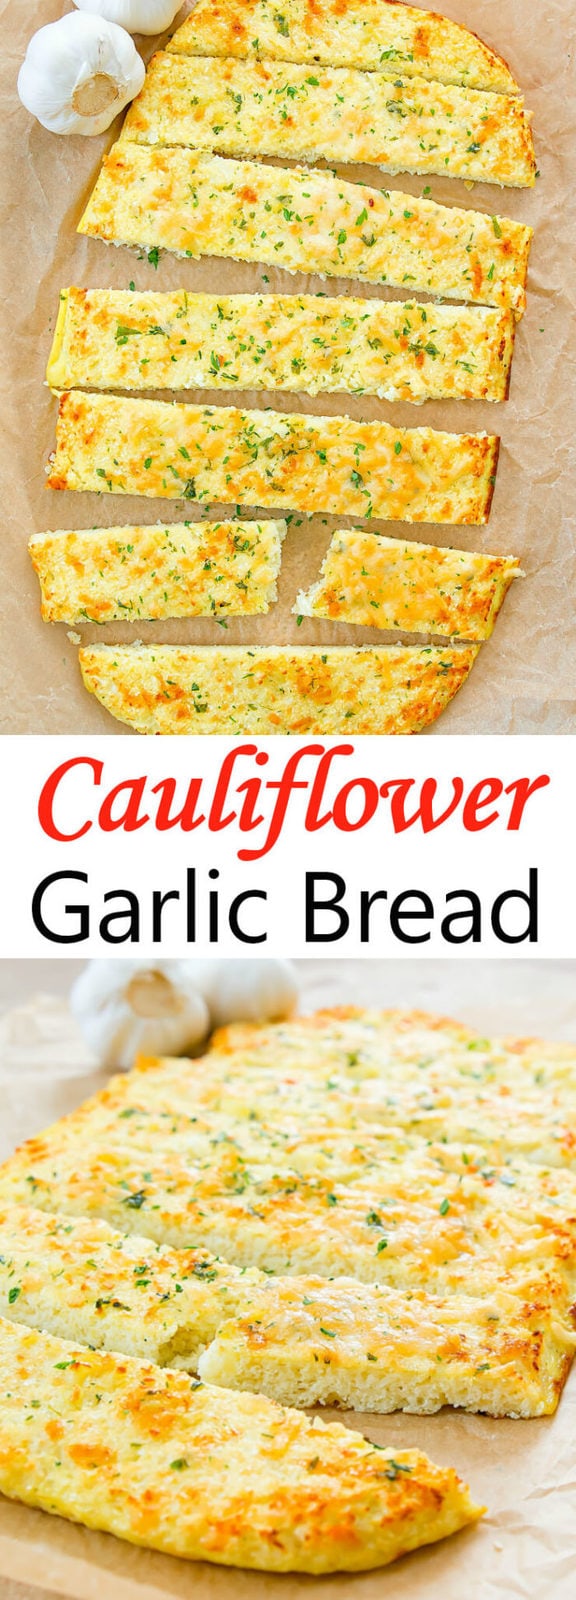 Cauliflower Garlic Bread